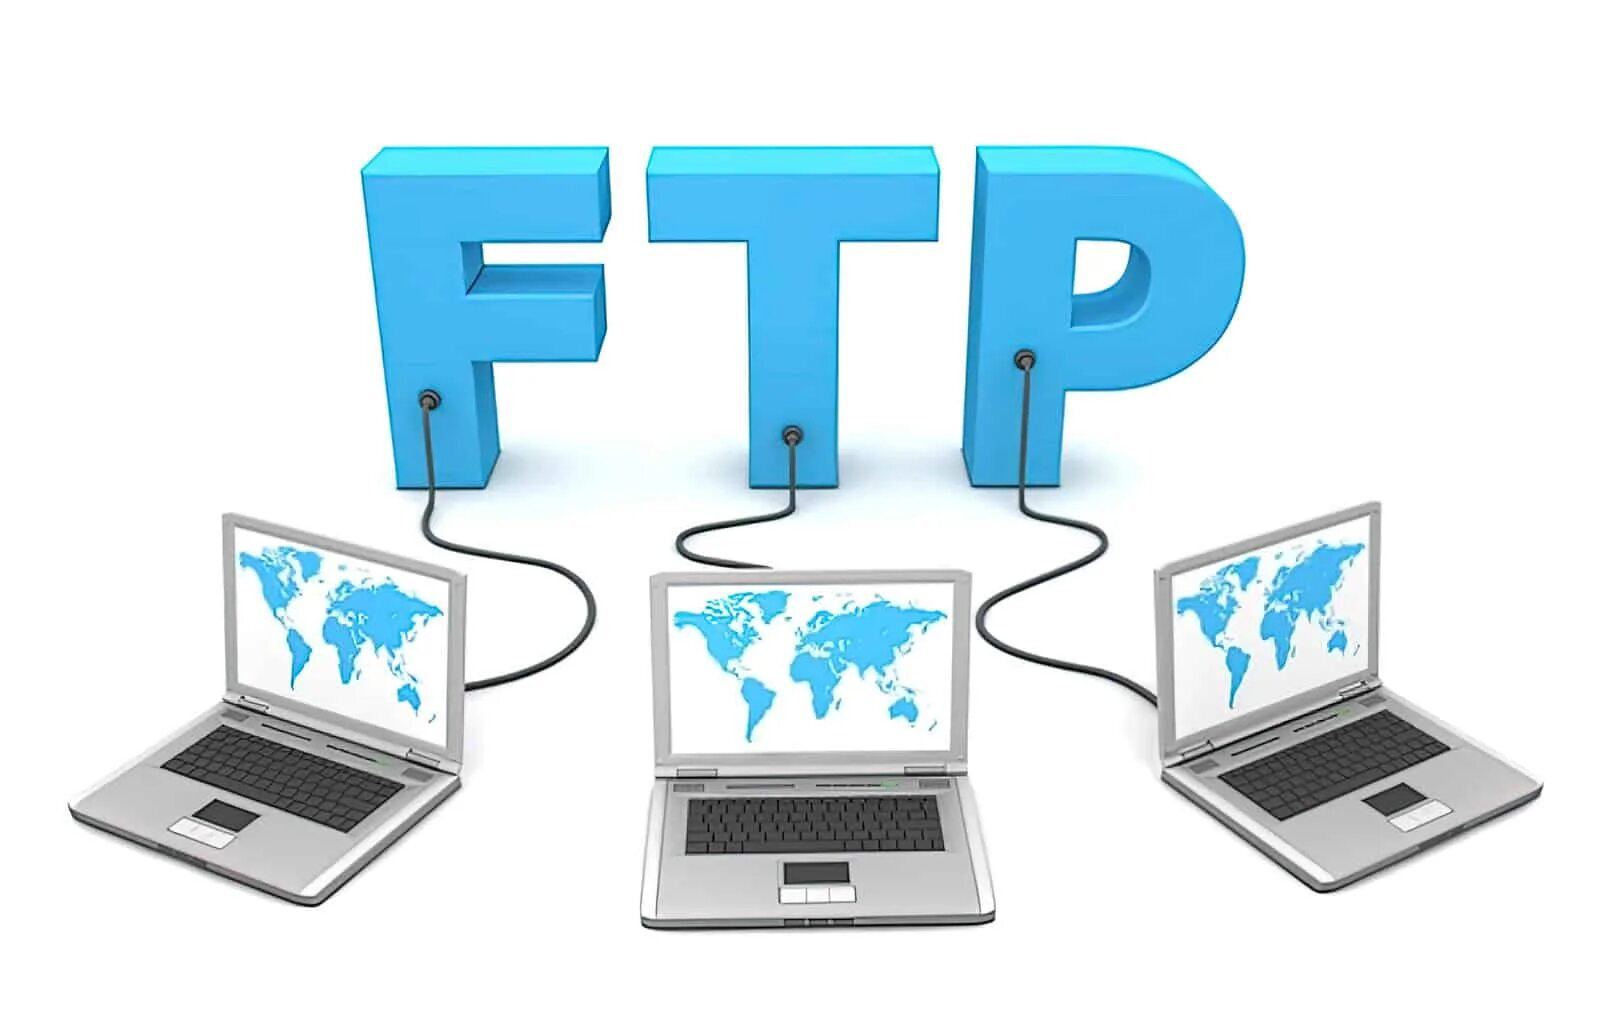 Формат в сети интернет. FTP — file transfer Protocol. FTP картинки. Сервис FTP. Сервис передачи файлов (FTP).